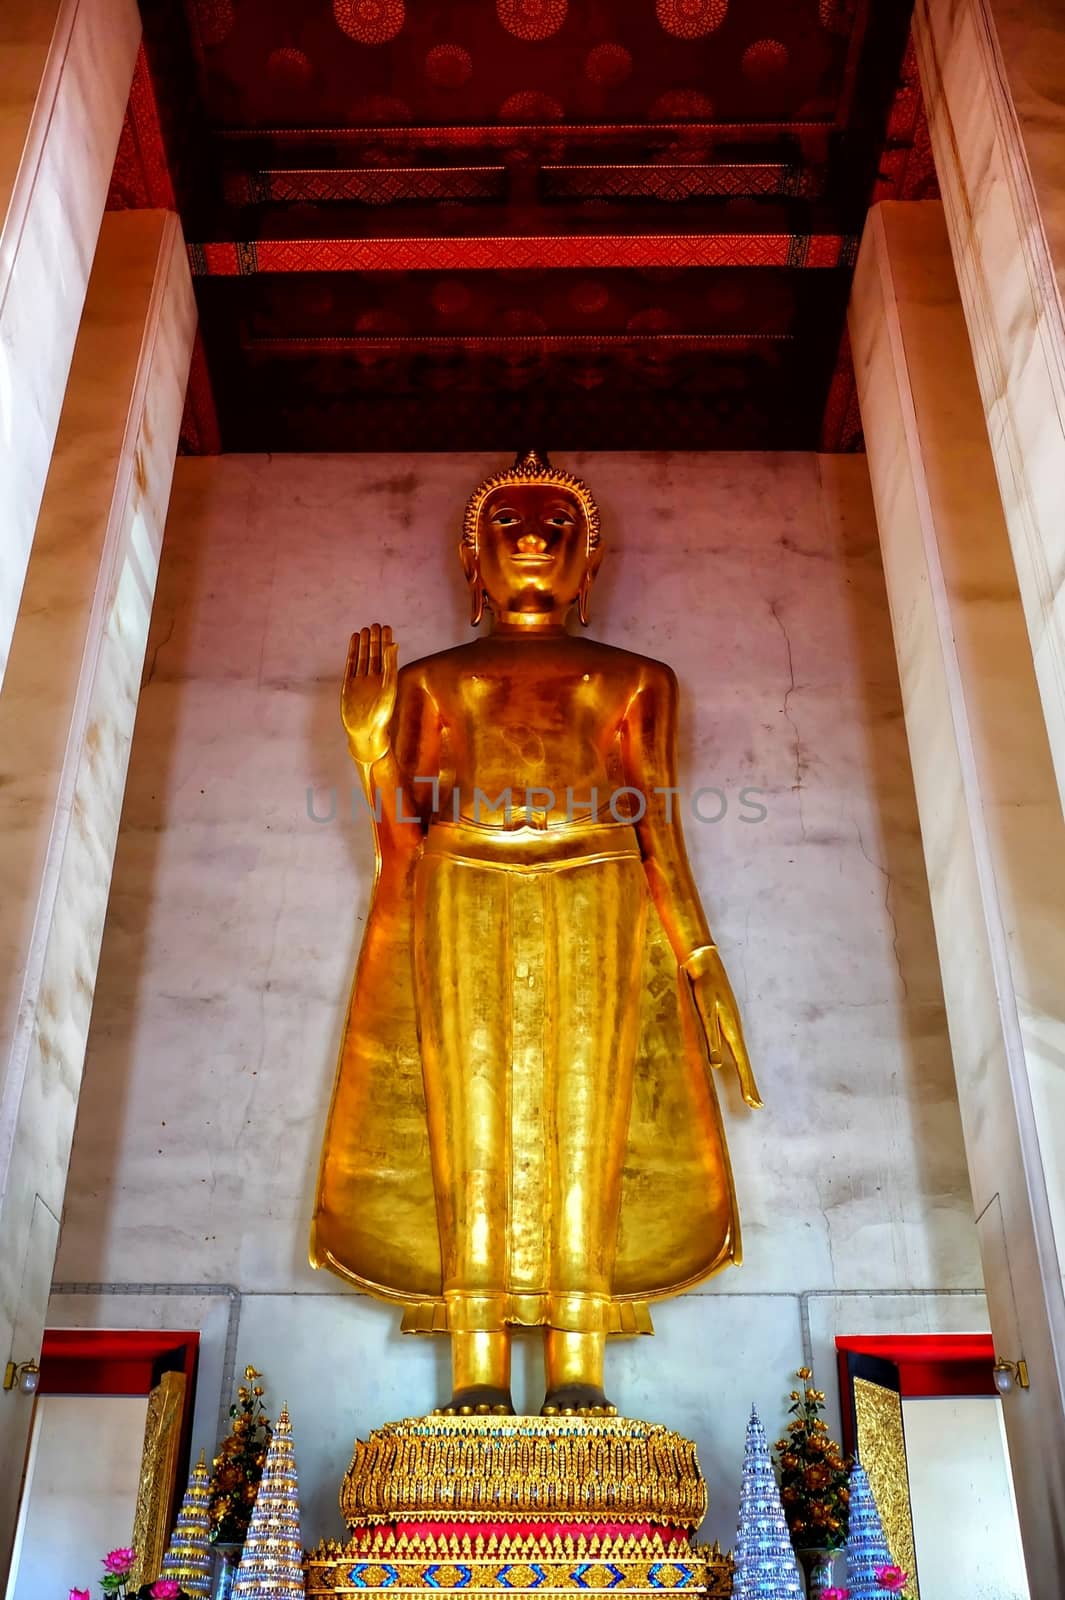 Ancient Huge Standing Buddha Image at Wat Saket Temple, Bangkok Thailand. by mesamong